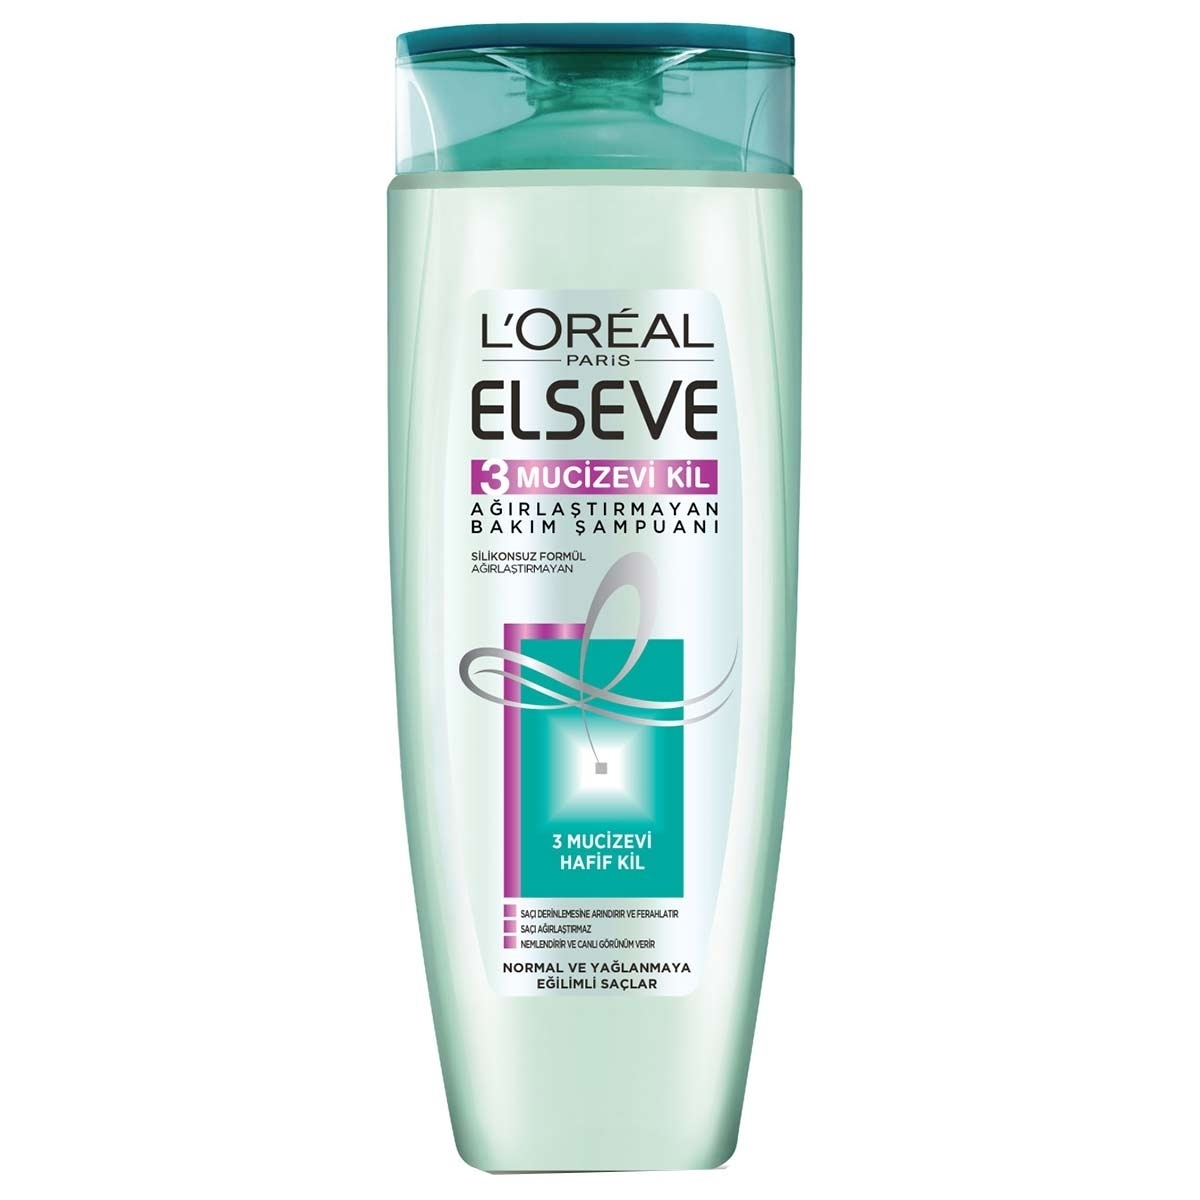 L'Oréal Elseve 3 Mucizevi Kil Şampuan 550 ml